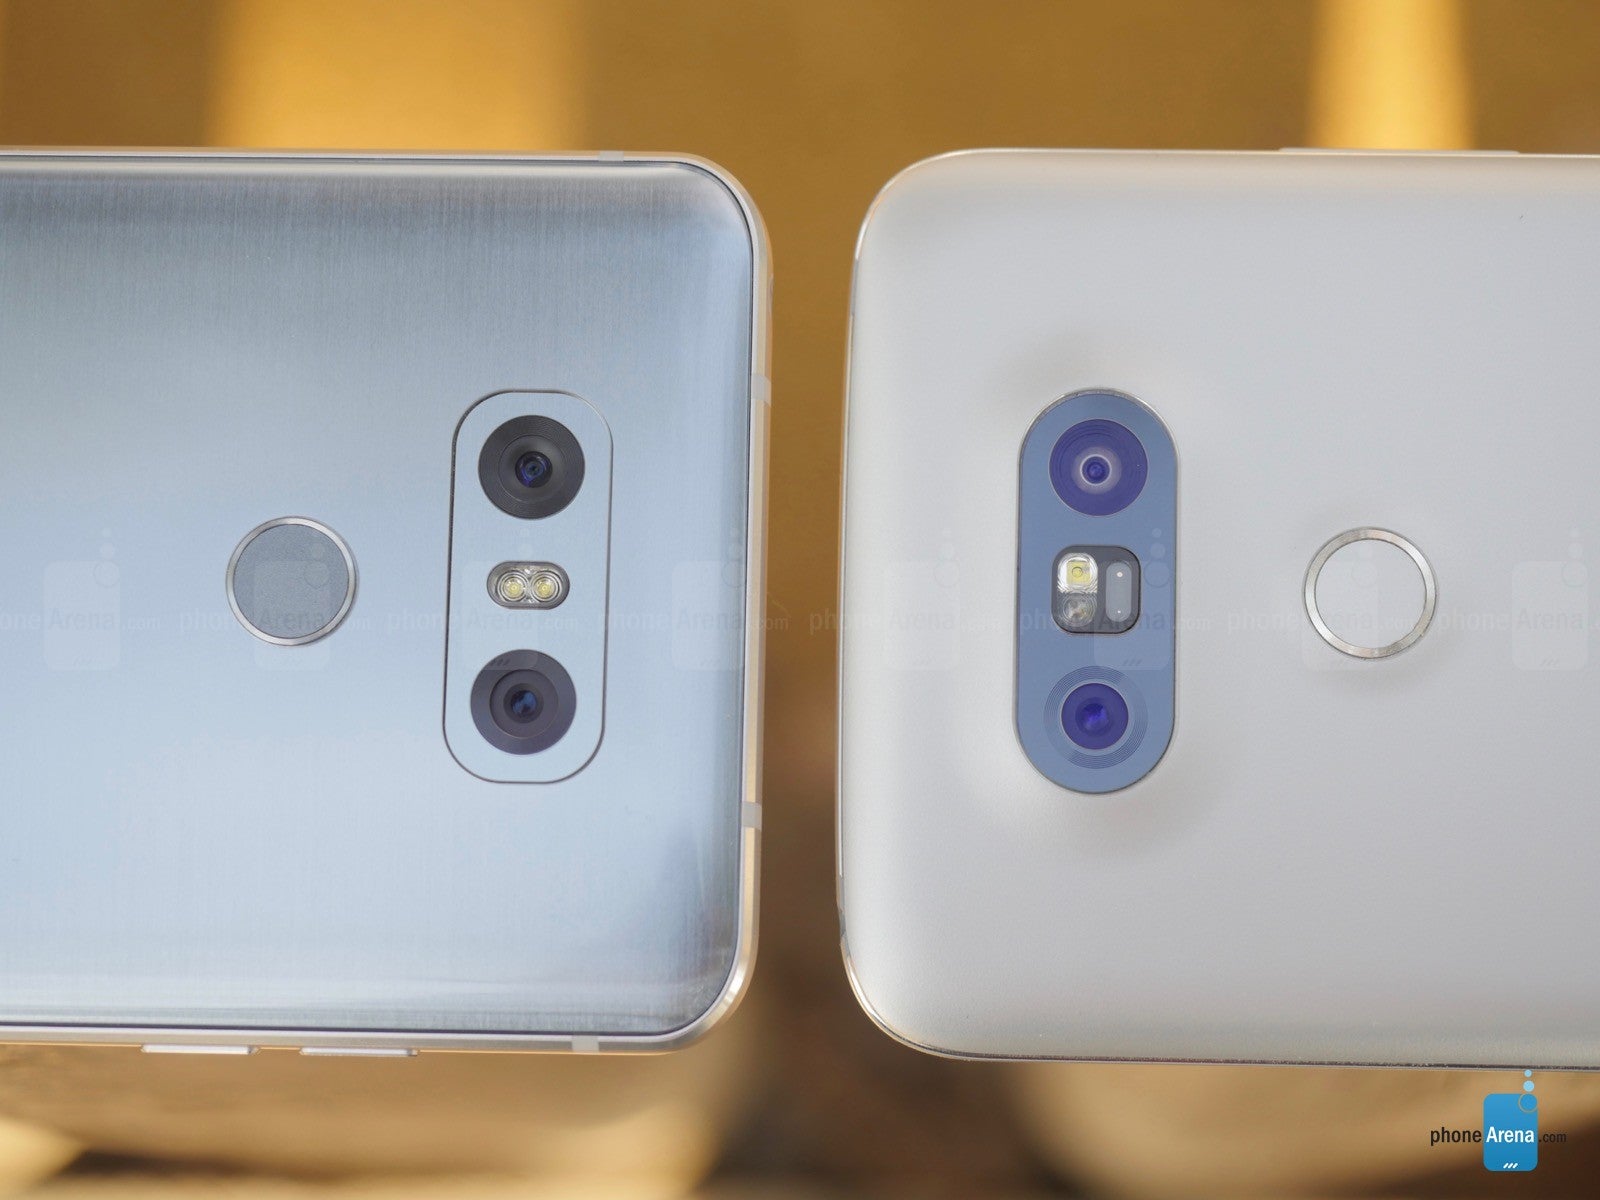 LG G6 vs G5, G4: should I upgrade?